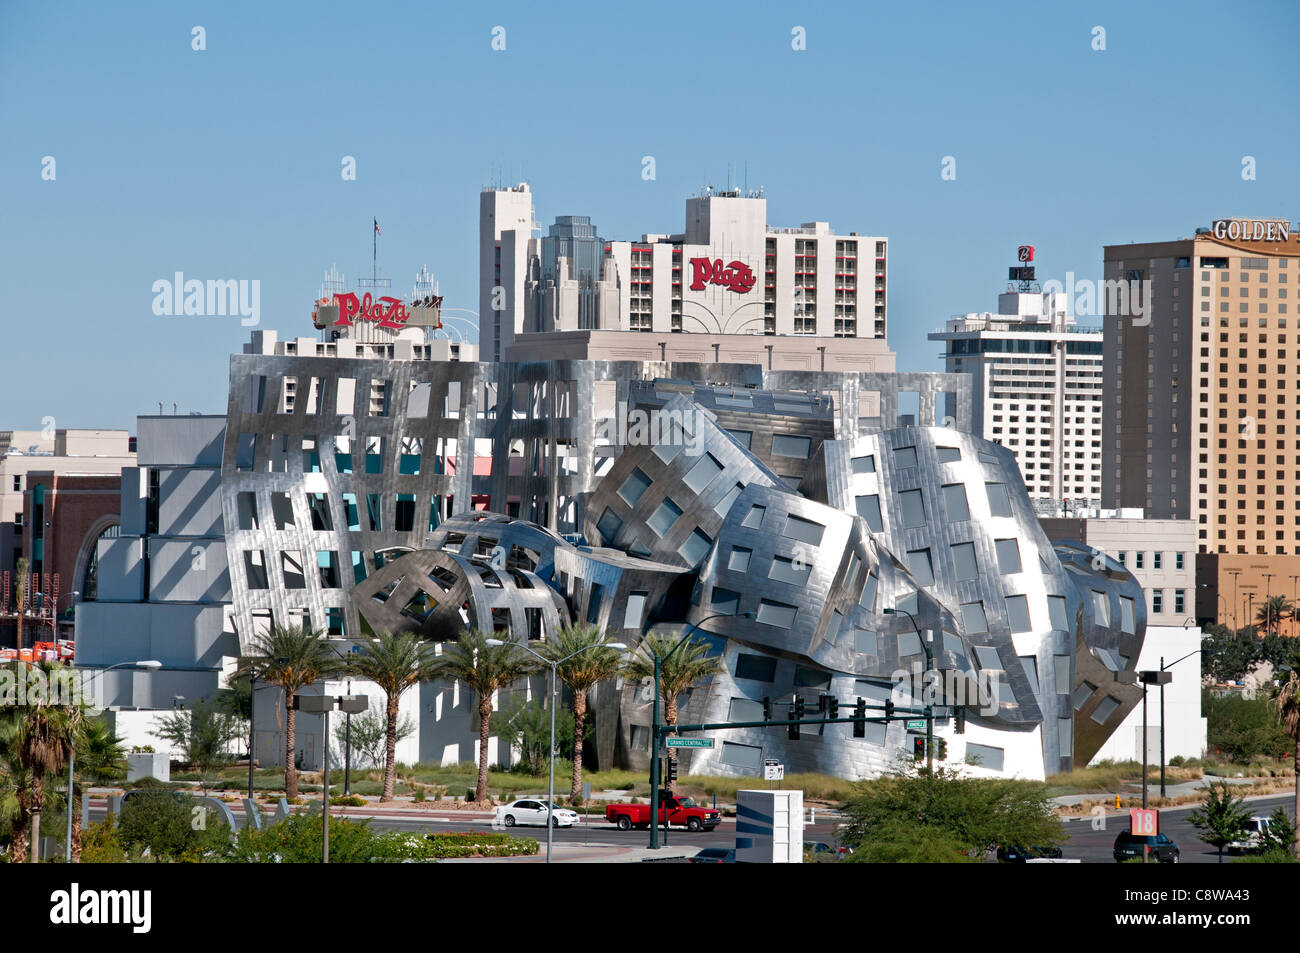 Cleveland Clinic Lou Ruvo Center for Brain Health Architekt Frank Gehry, USA, Architekt Frank Gehry, USA Stockfoto